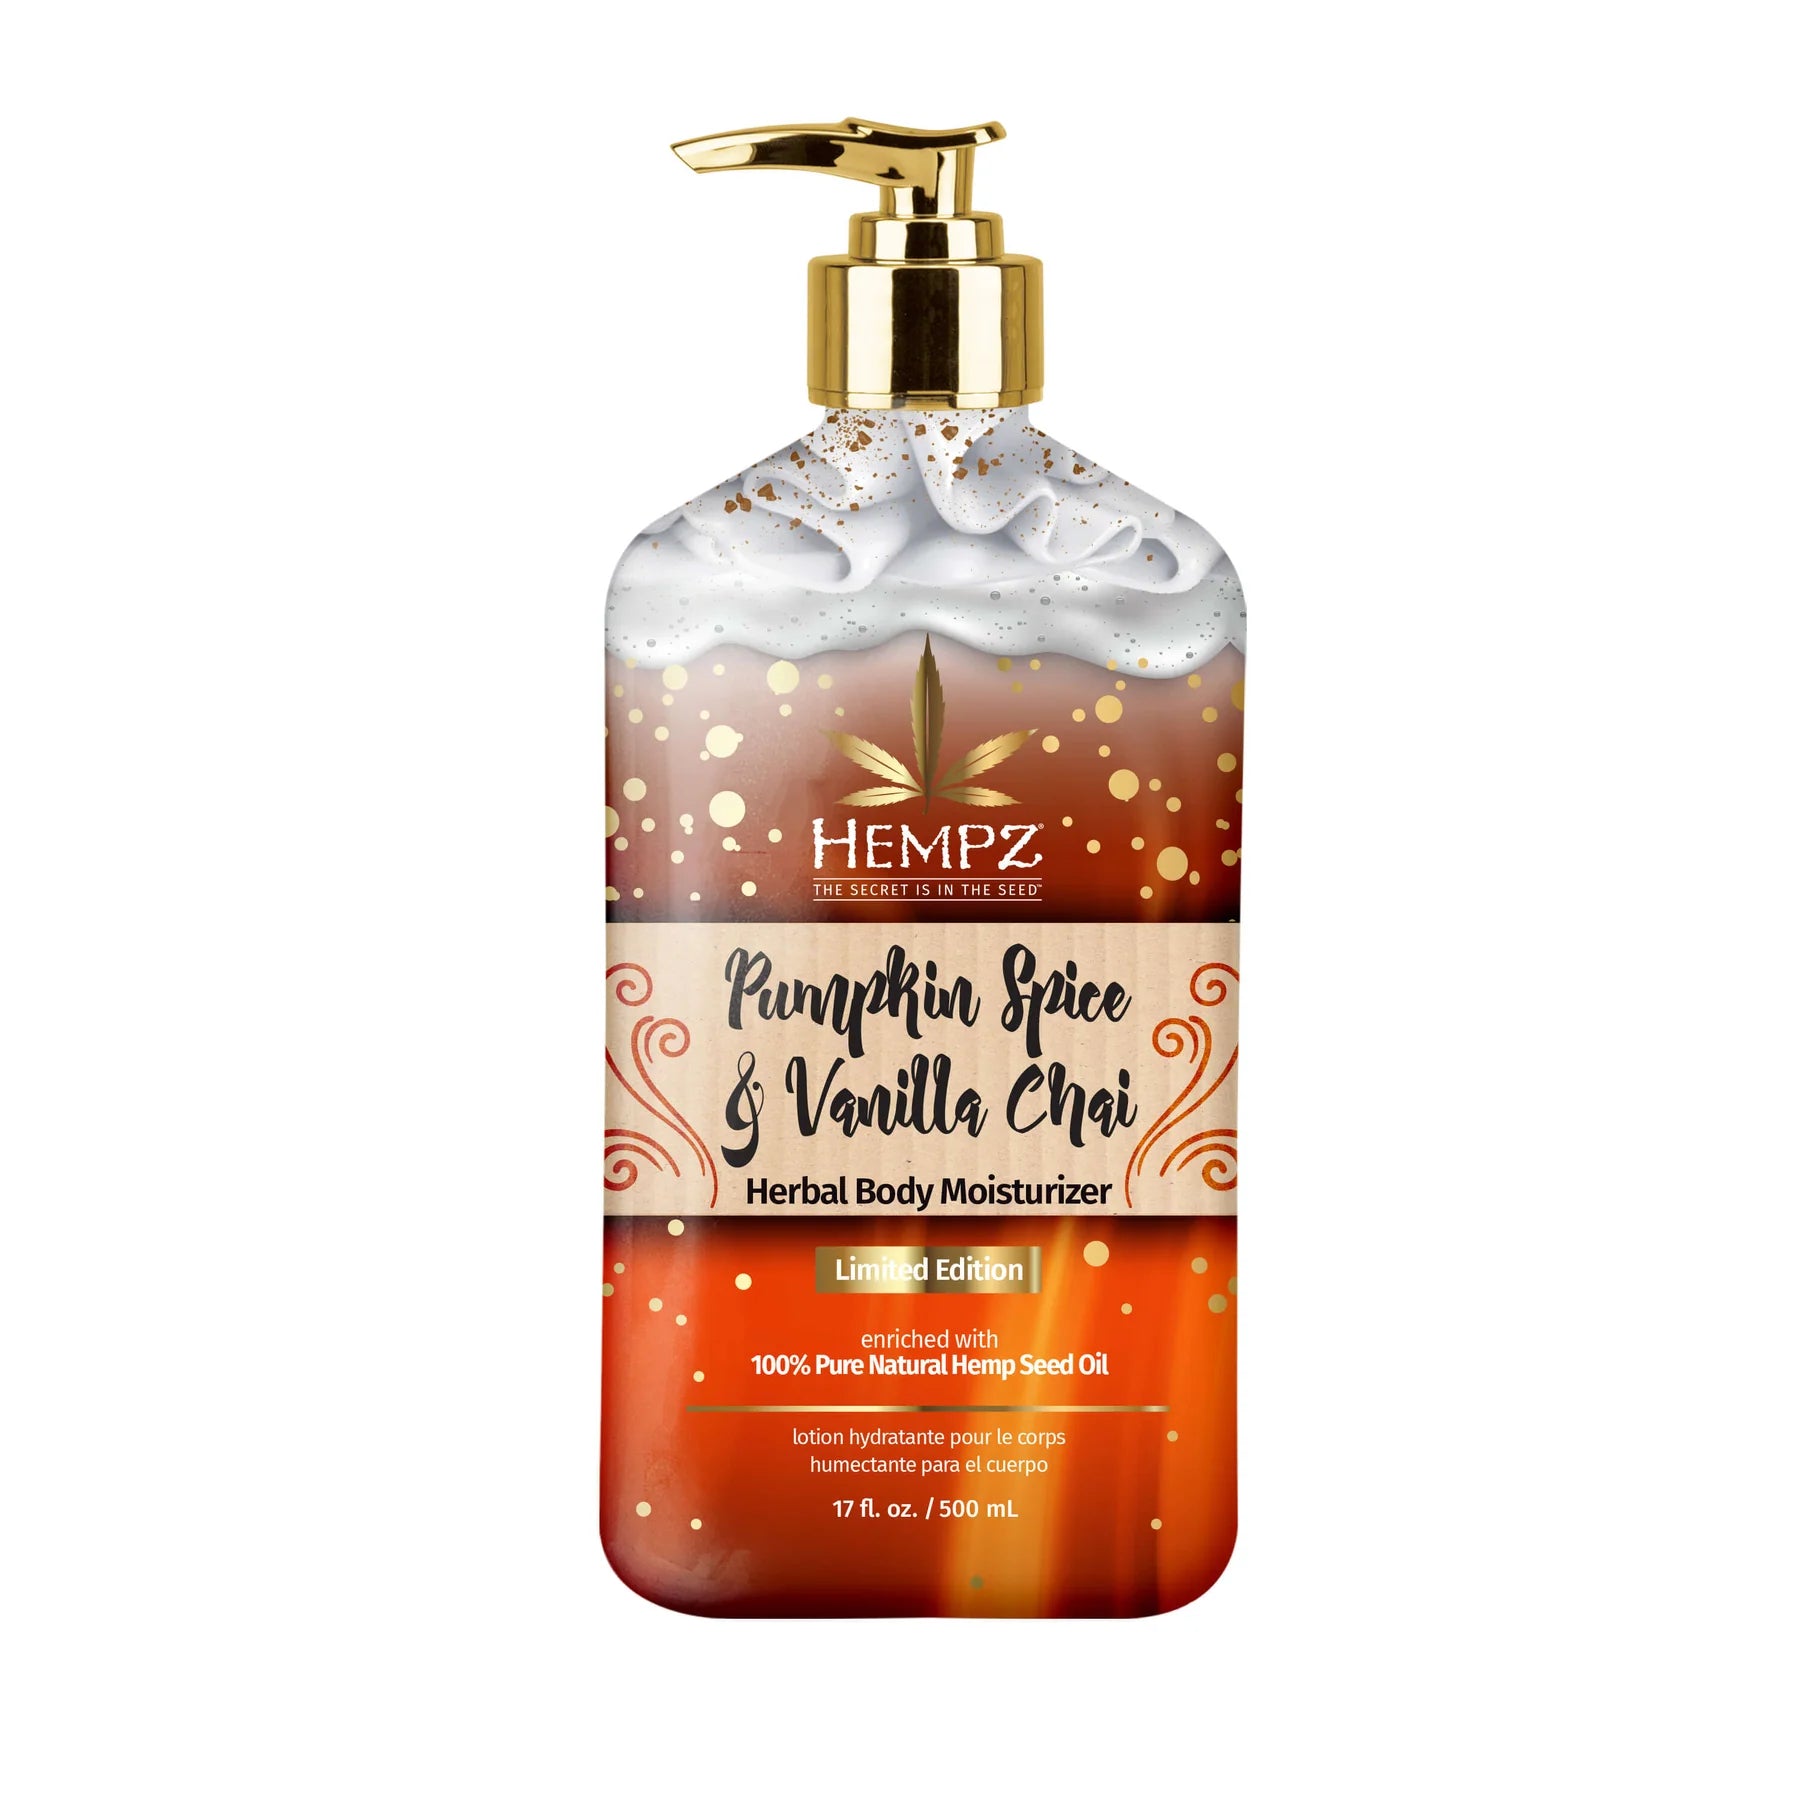 Hempz - Limited Edition Pumpkin Spice & Vanilla Chai Herbal Body Moisturizer - Creata Beauty - Professional Beauty Products